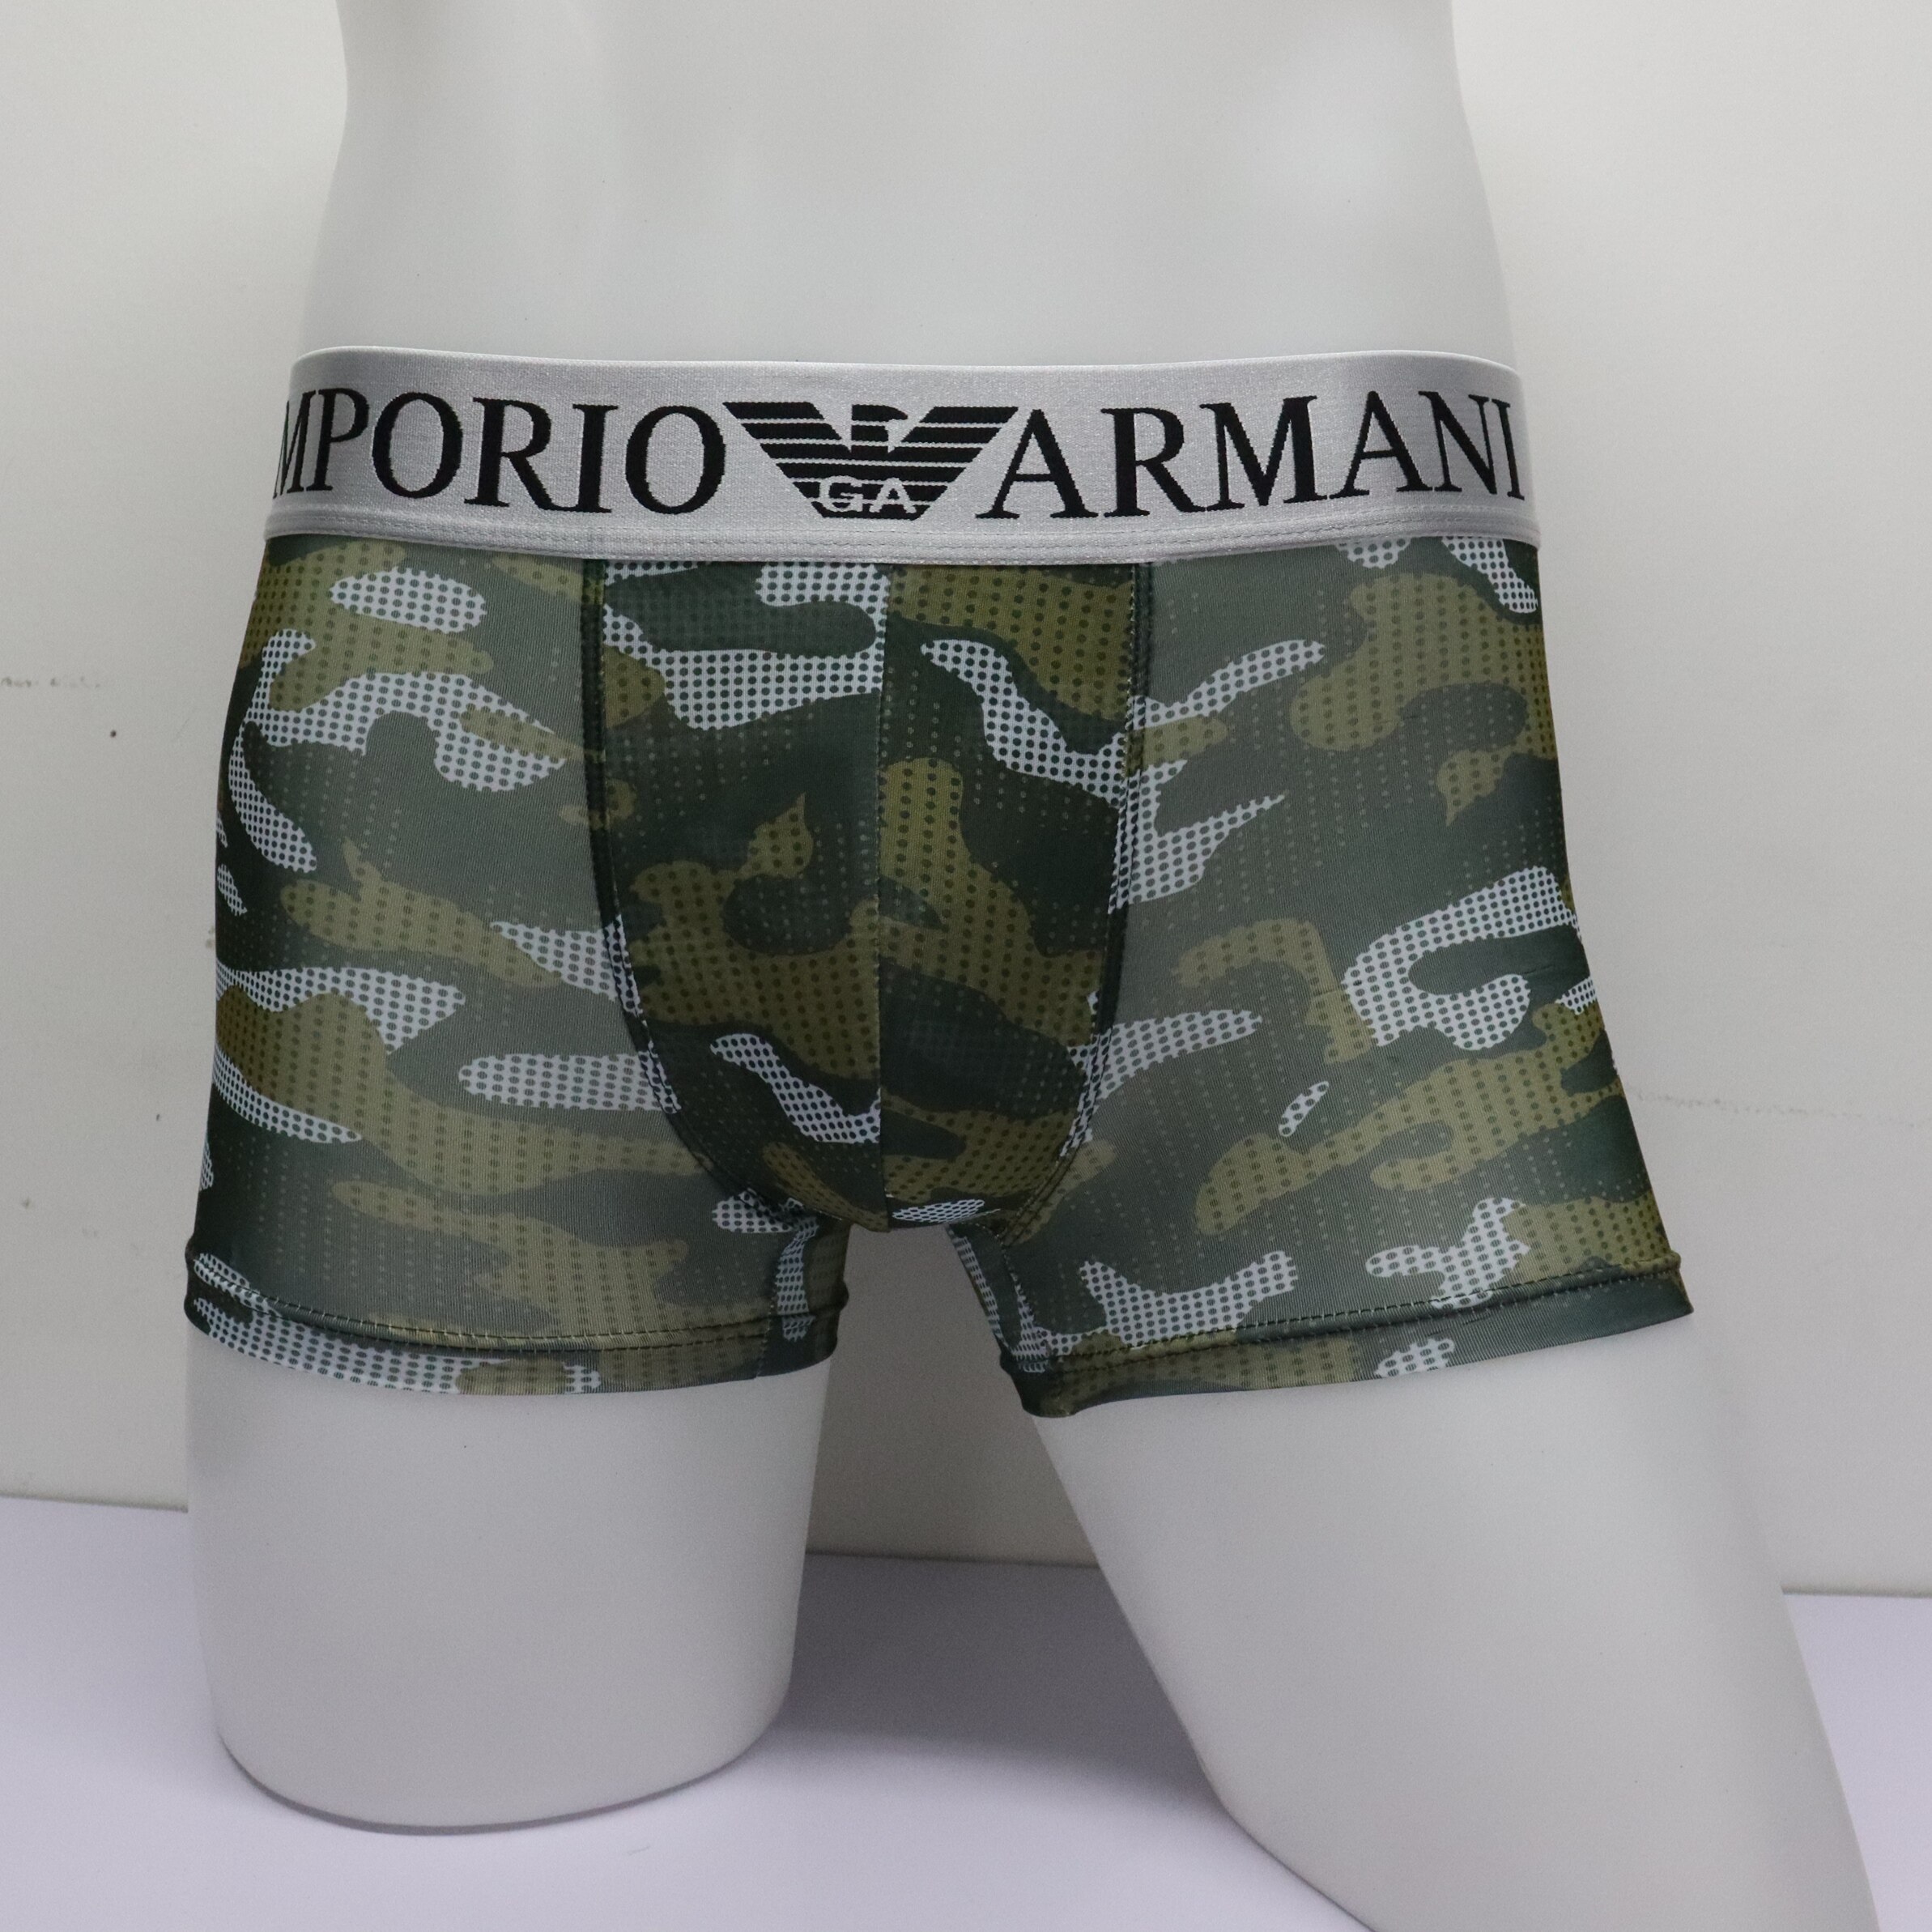 Boxer กางเกงบ๊อกเซอร์ลายทหาร อามานี (Men's underwear) ผ้าไนลอน เซ็กซี่ ใส่สบาย ระบายอากาศ ยืดหยุ่นสูง คุ้มเกินราคา